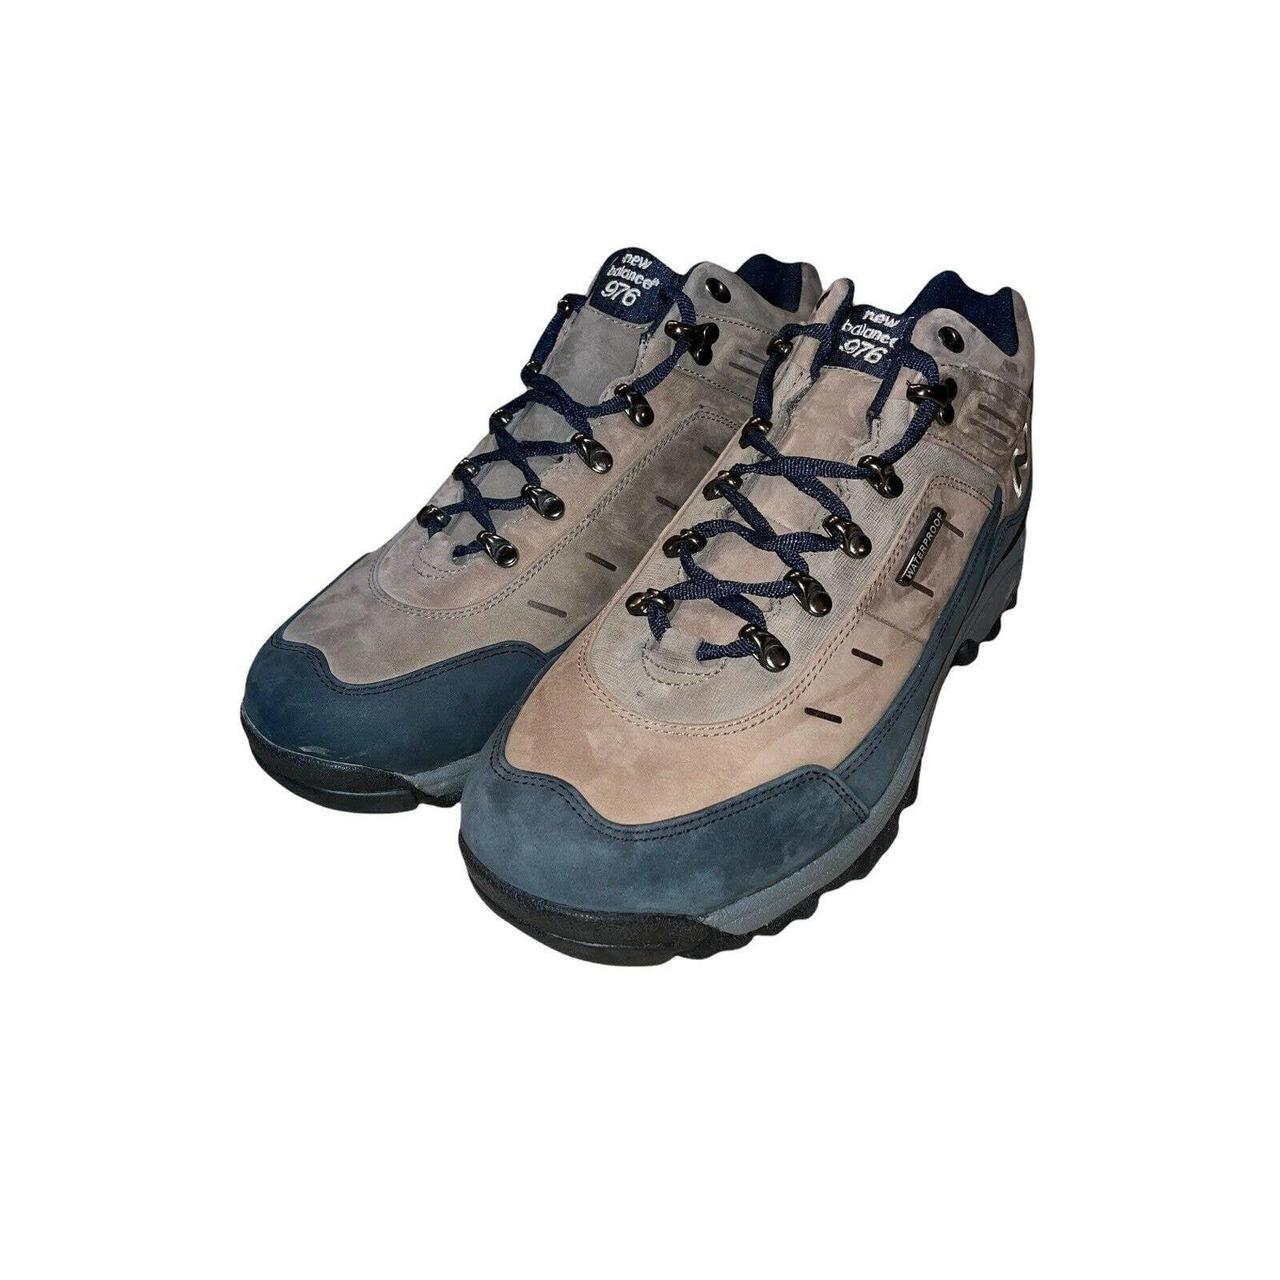 Women’s New Balance 976 Hiking Boots MW976BG... - Depop